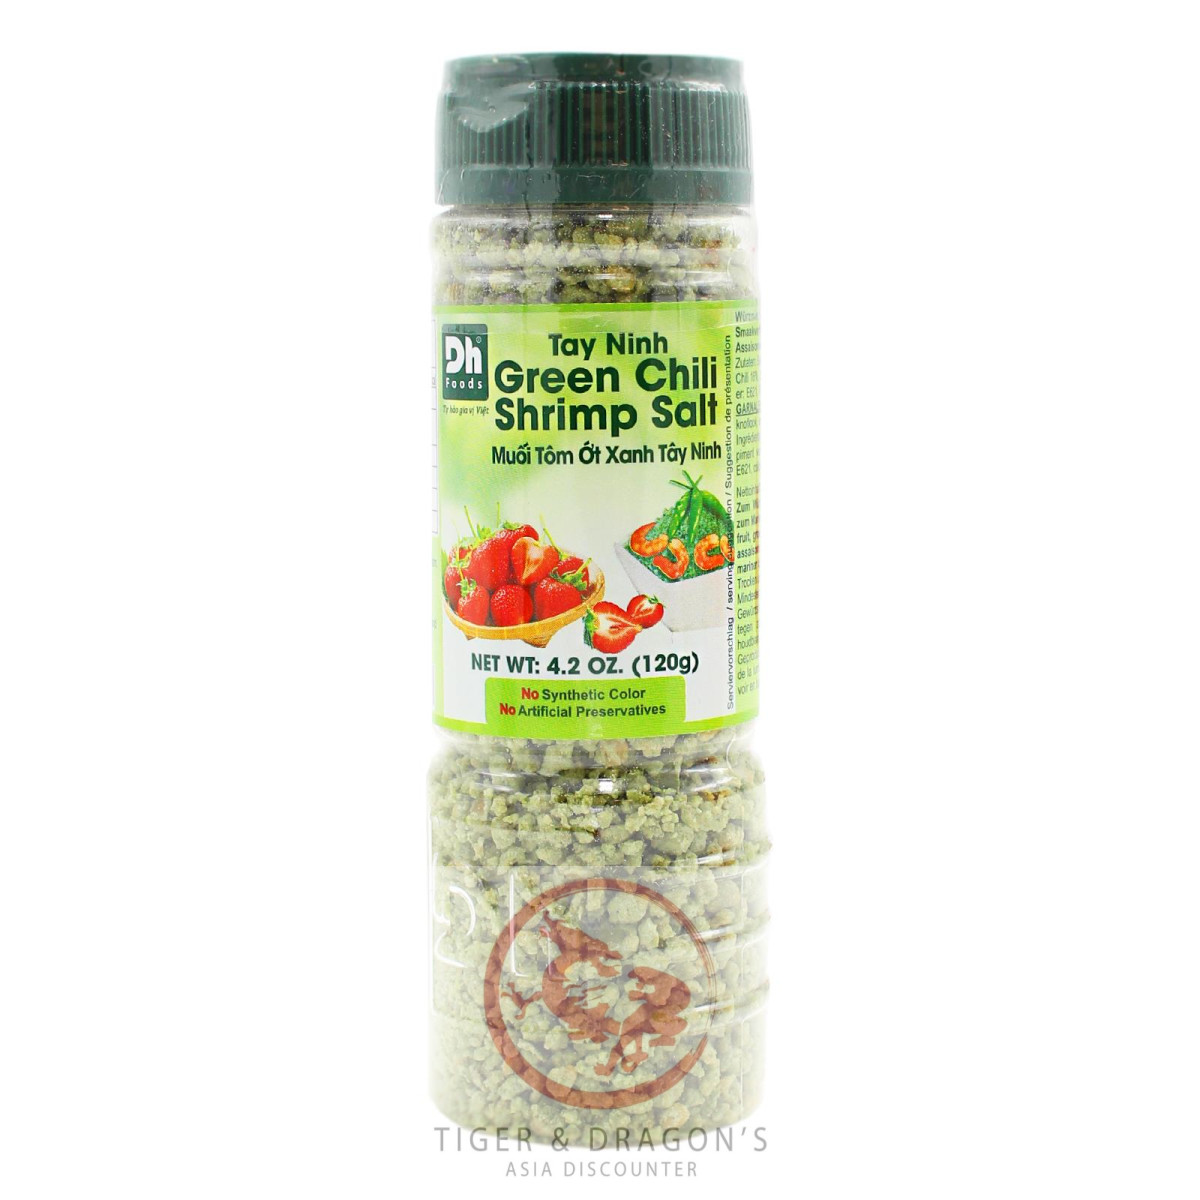 DH Foods Green Chili Shrimp Salt Muoi Tom Ot Xanh 120g